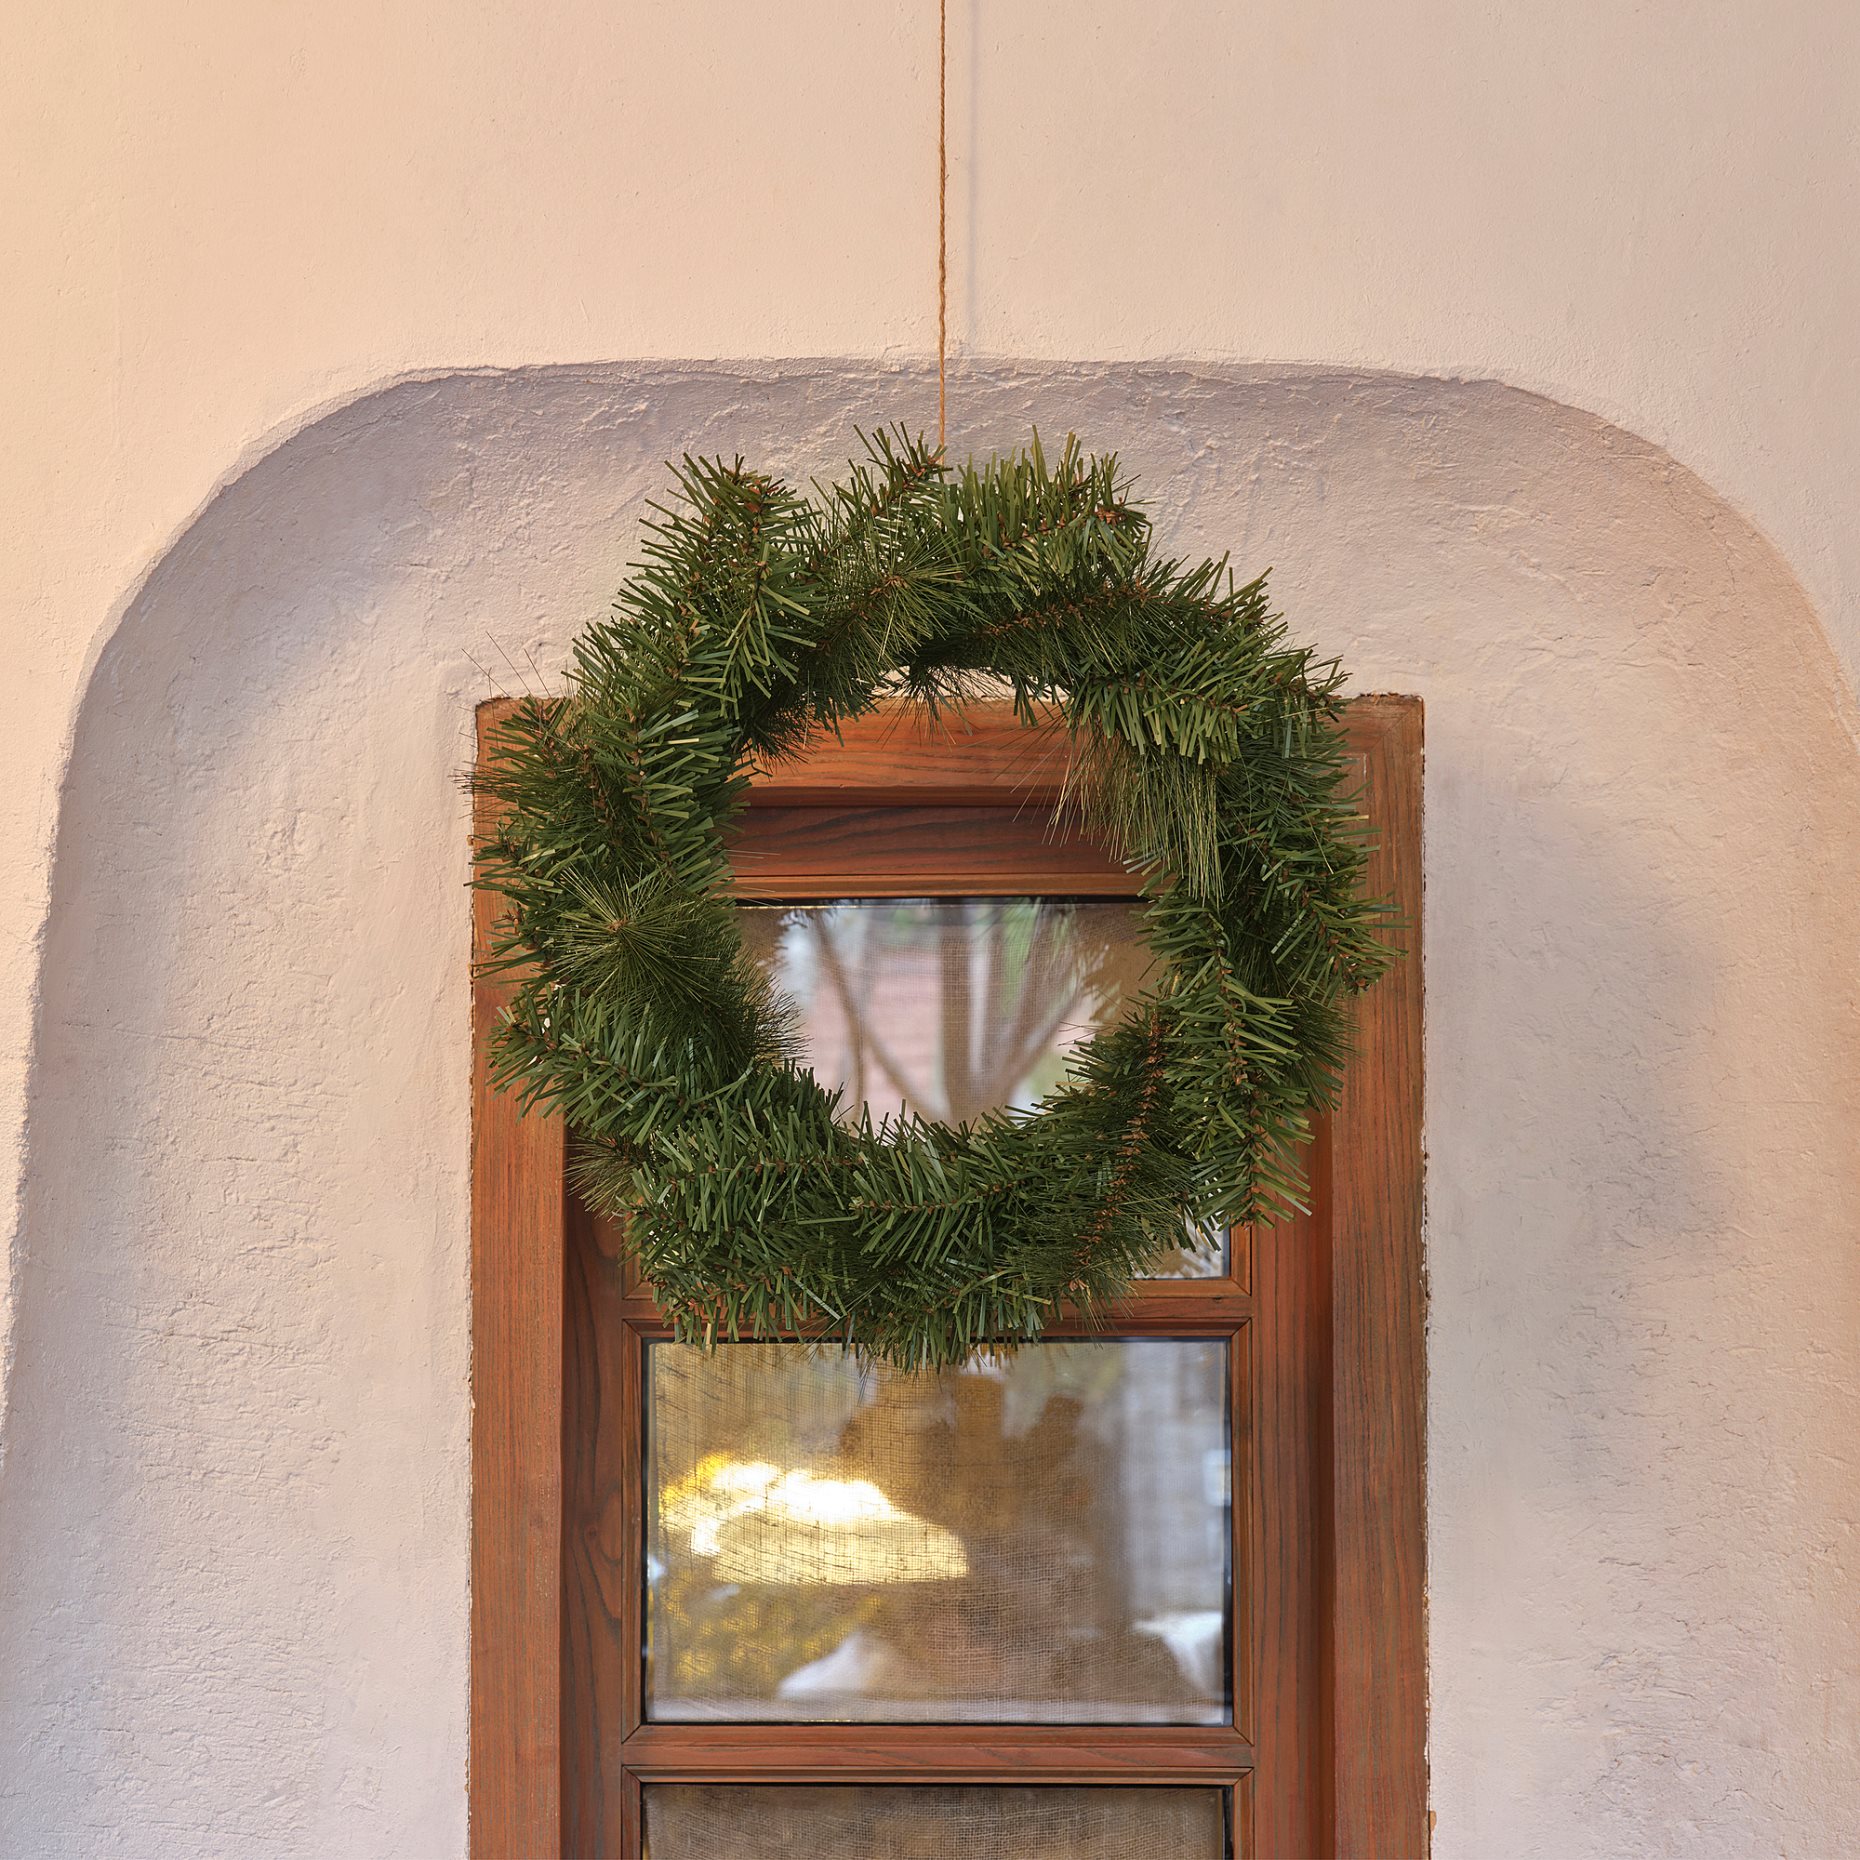 VINTERFINT, artificial wreath/in/outdoor/pine spruce, 45 cm, 505.621.30